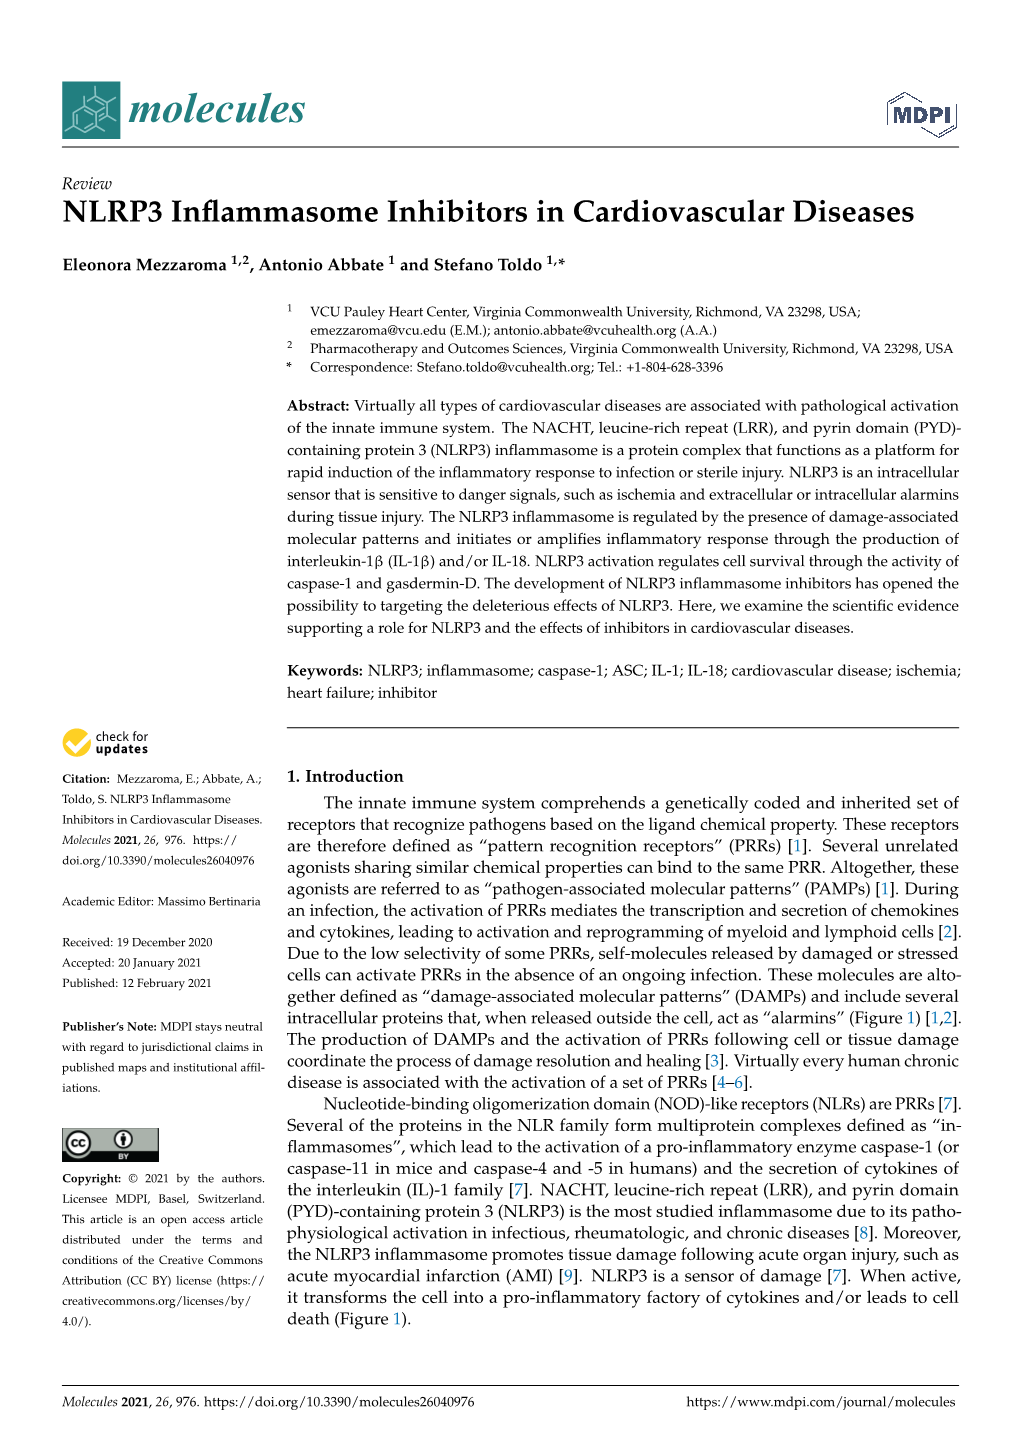 NLRP3 Inflammasome Inhibitors in Cardiovascular Diseases